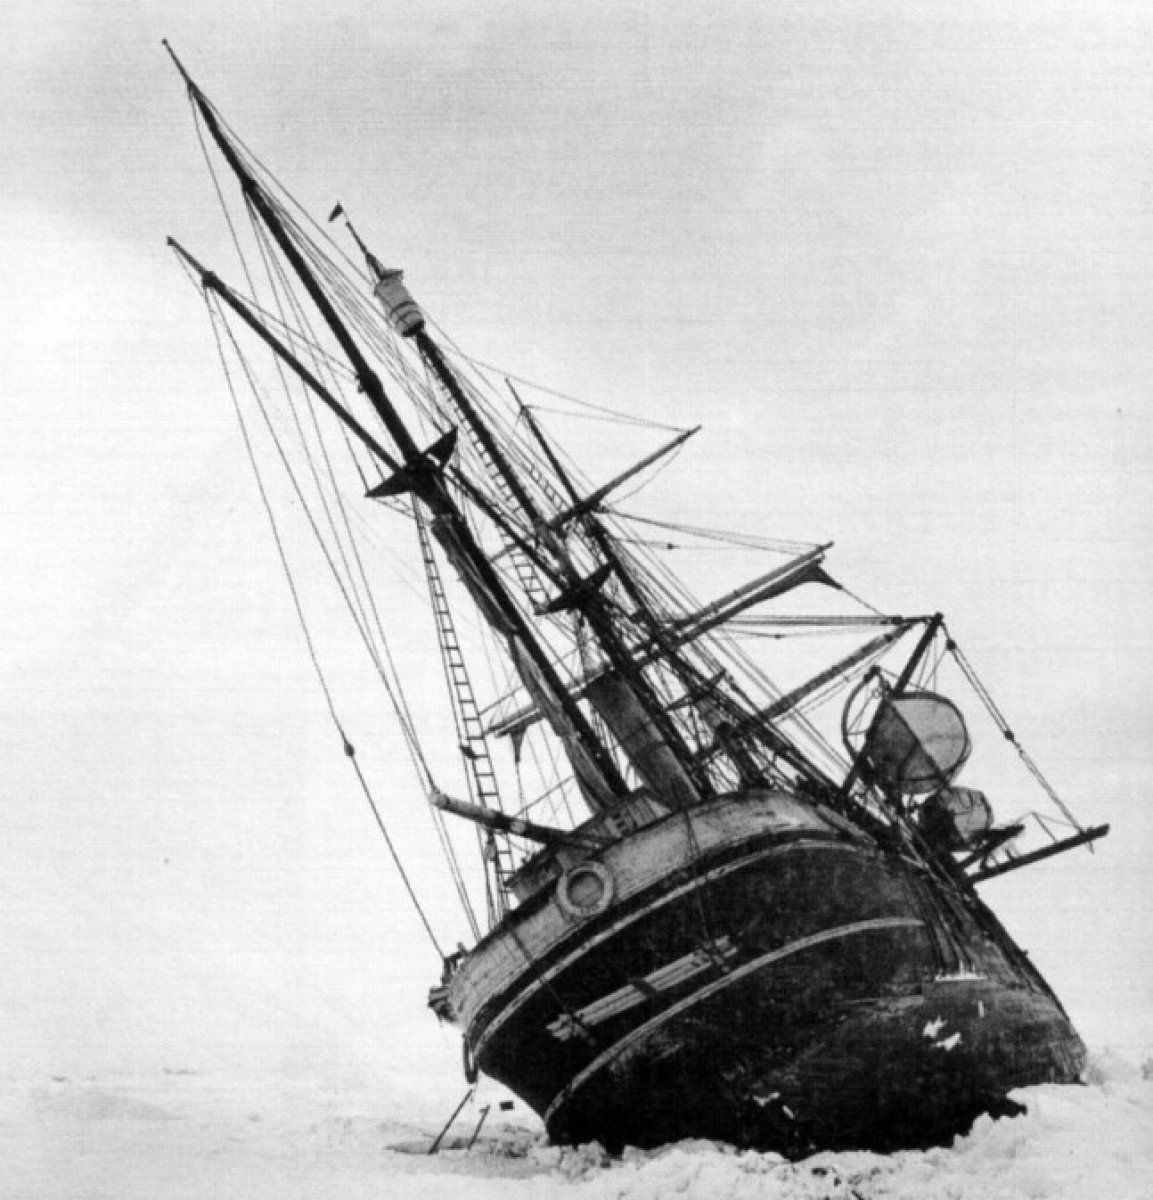 Antarctica sank 107 years ago: wreckage of Endurance found #1